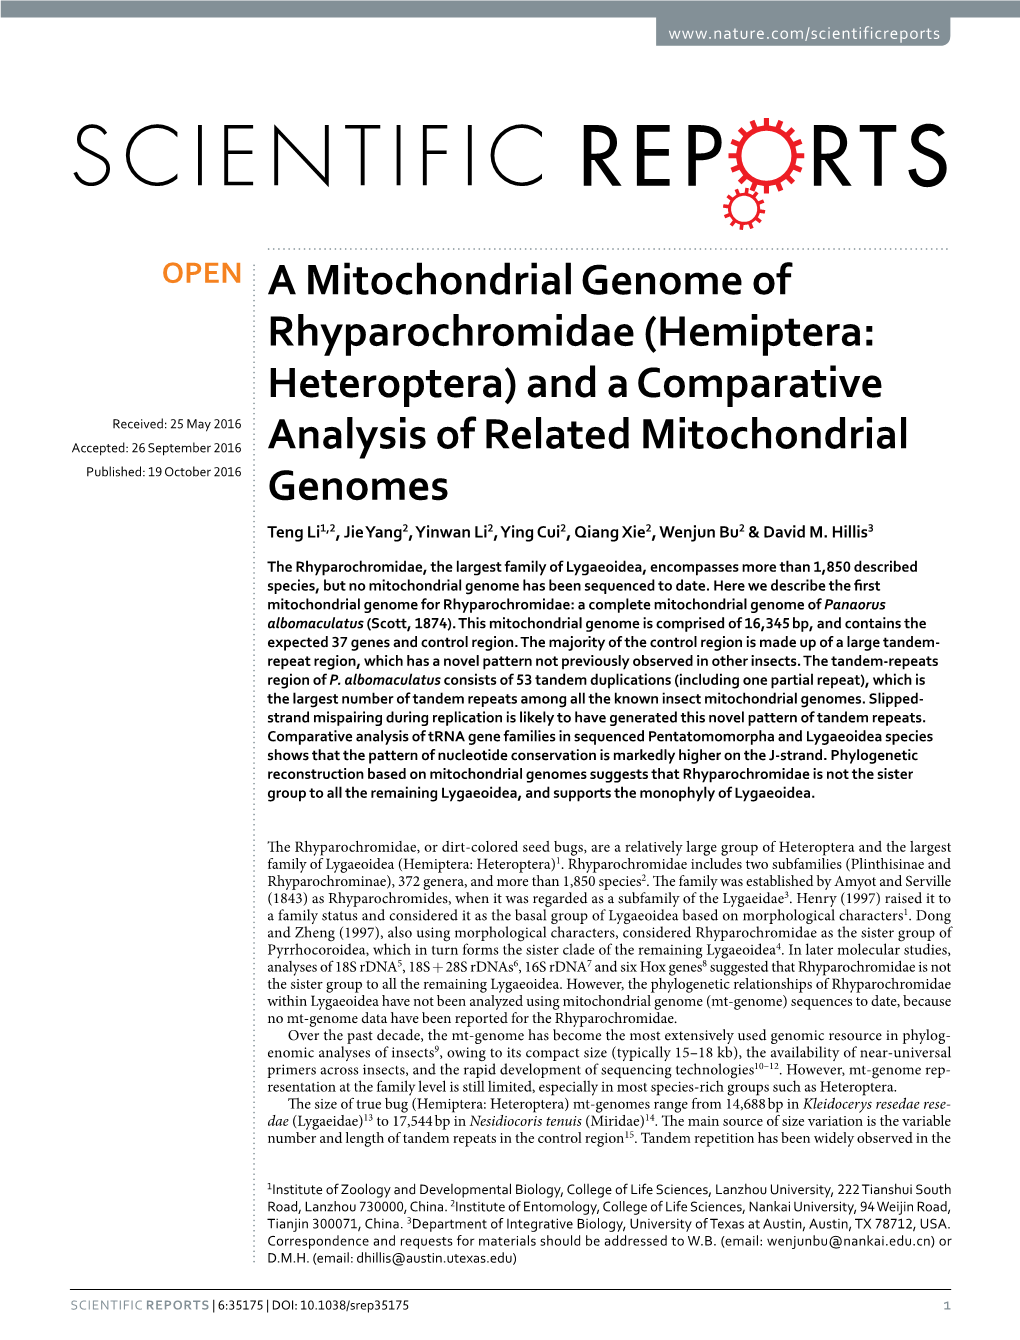 A Mitochondrial Genome of Rhyparochromidae